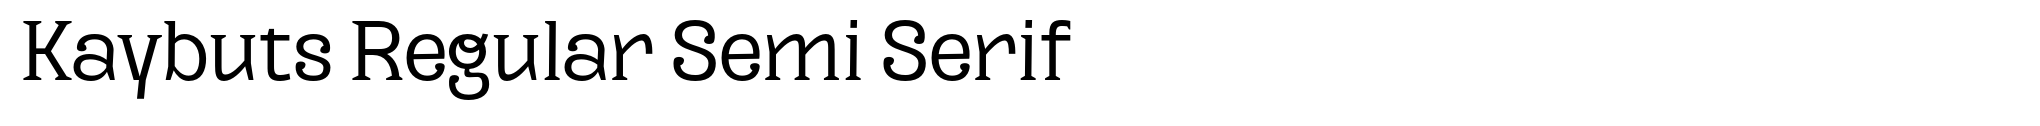 Kaybuts Regular Semi Serif image